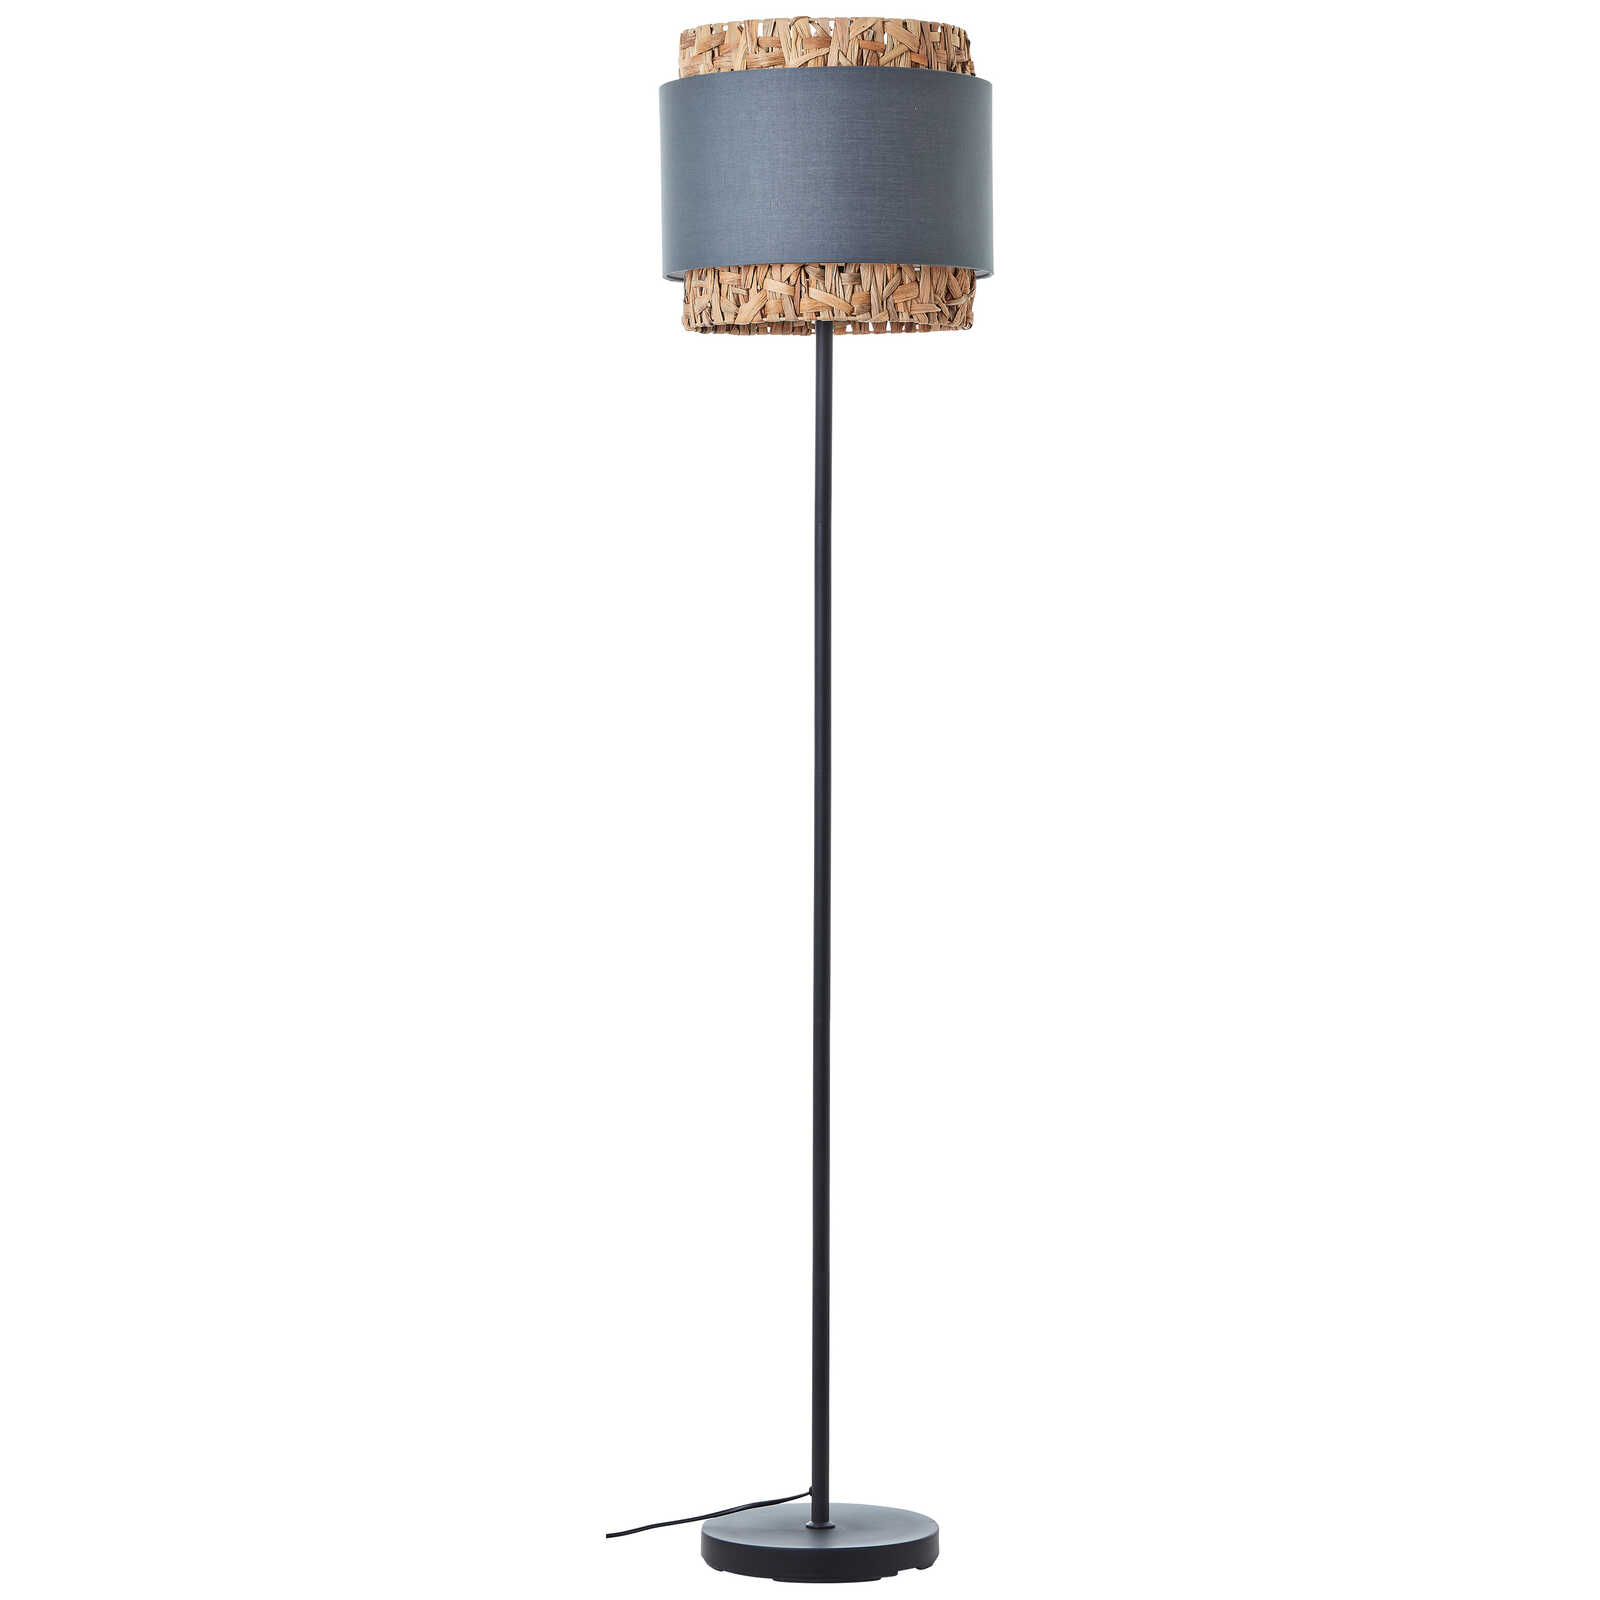             Floor lamp made of textile - Till 8 - Beige
        